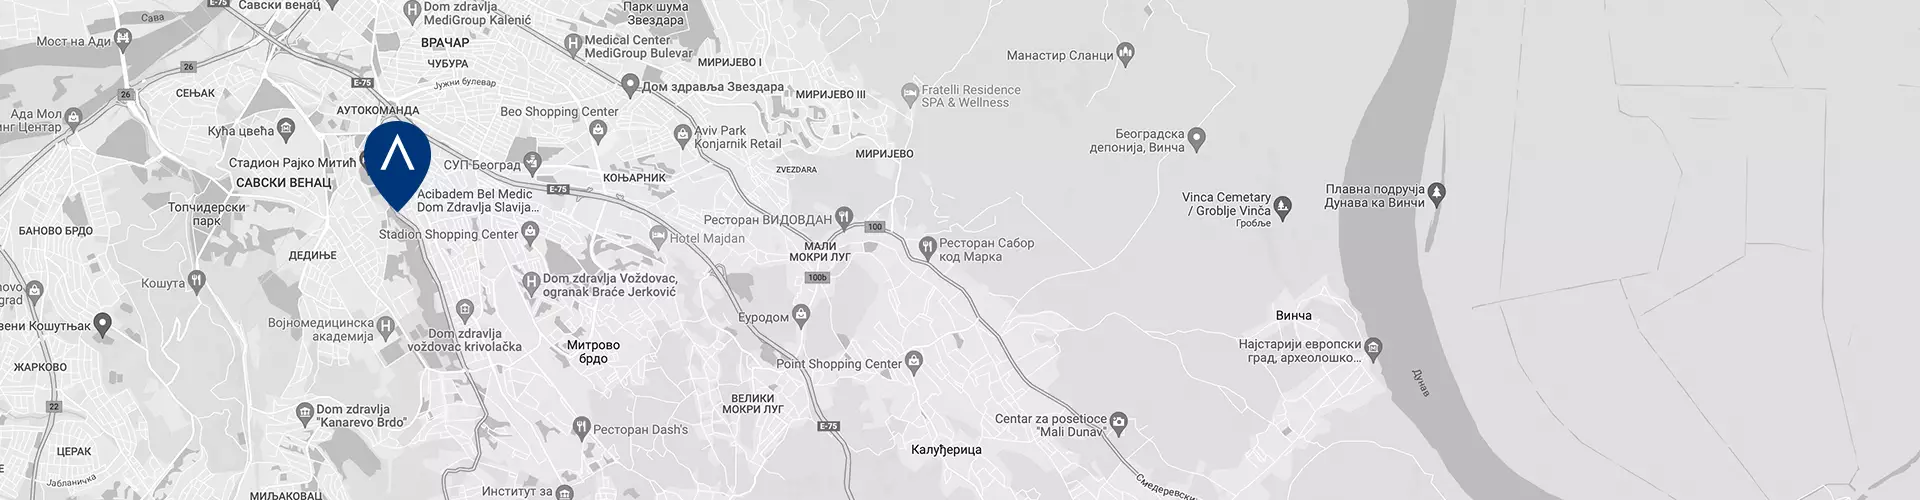 bel-medic-slavija-ogaranak-tip-merkezi-google-maps-image.webp